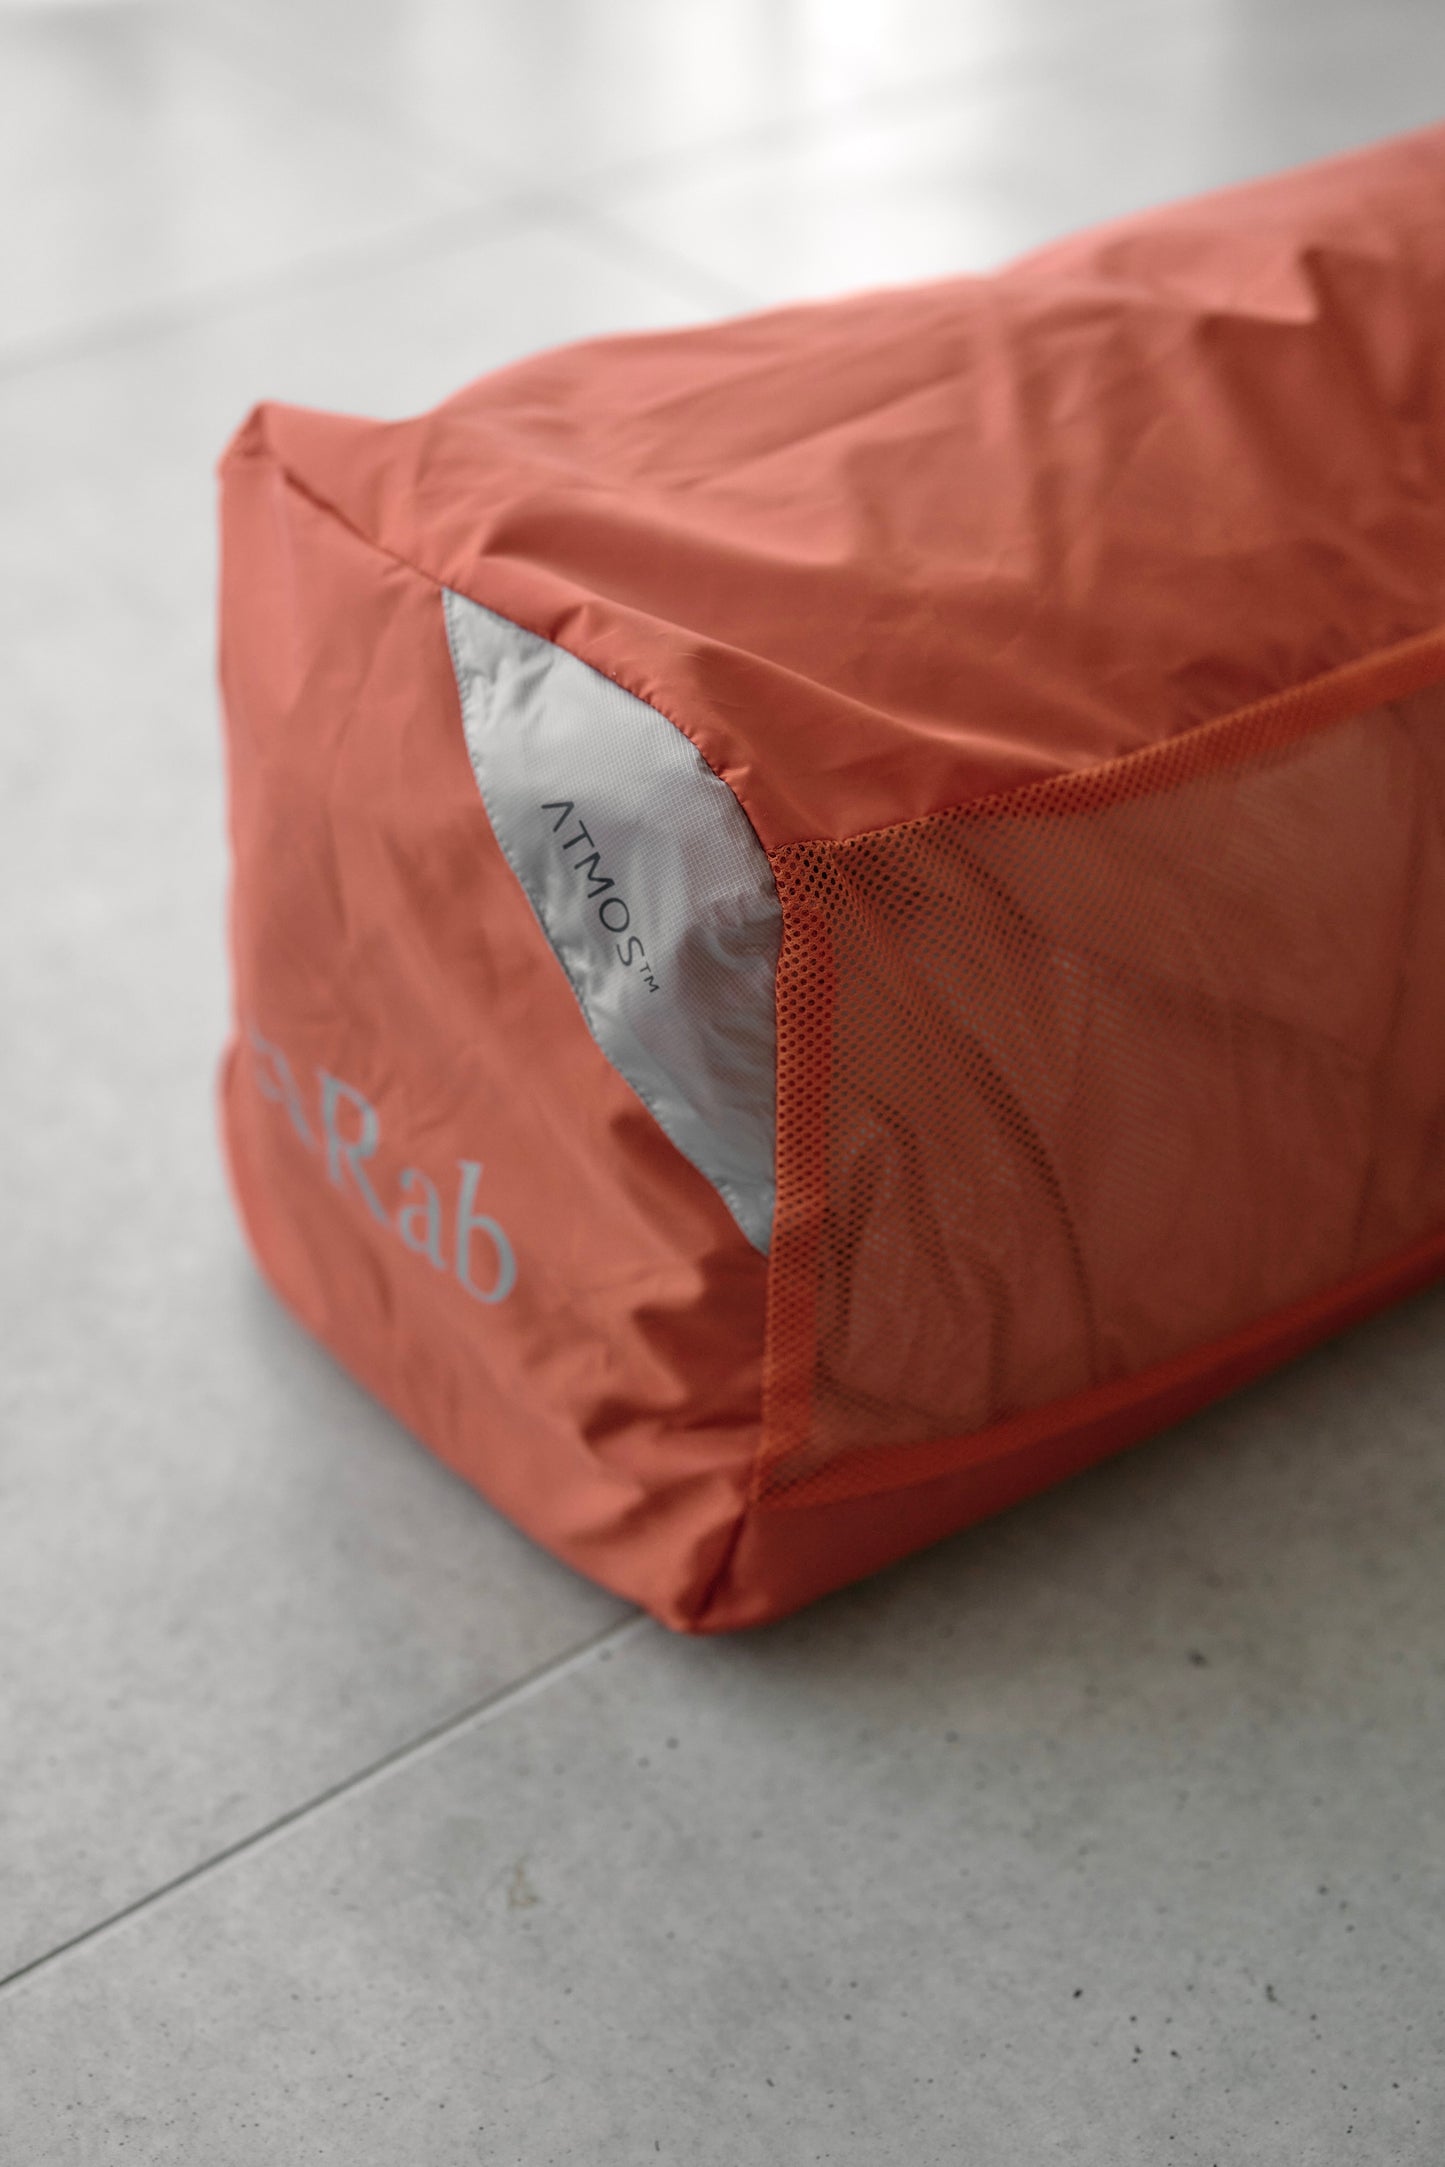 Rab / Mythic Ultra 120 Modular Down Sleeping Bag